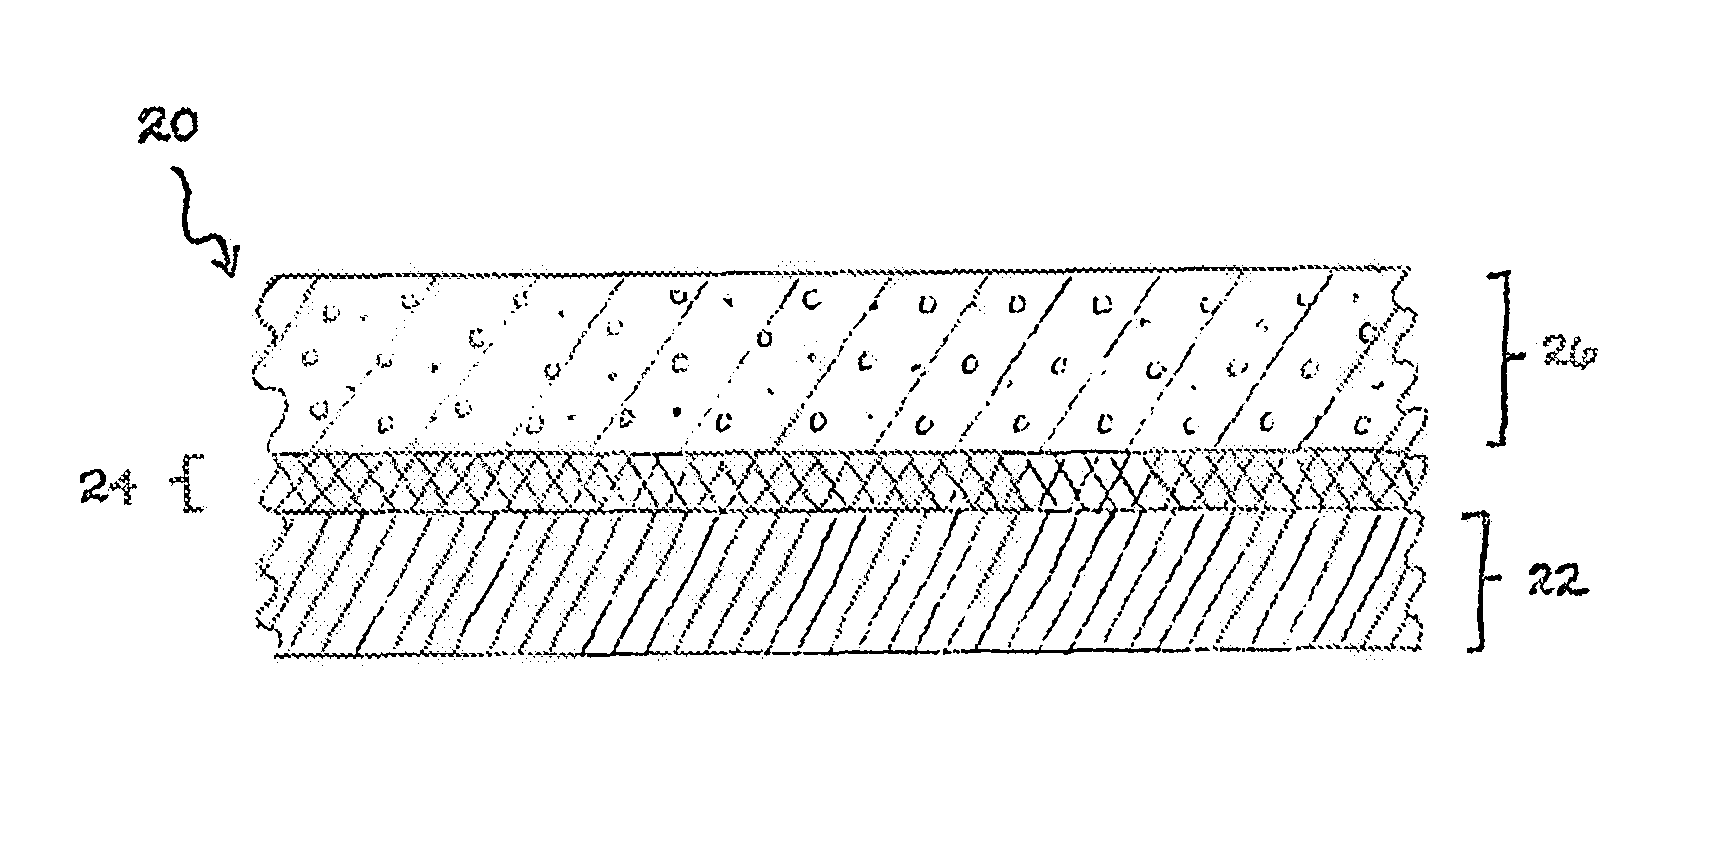 Method for sealing wood subfloors